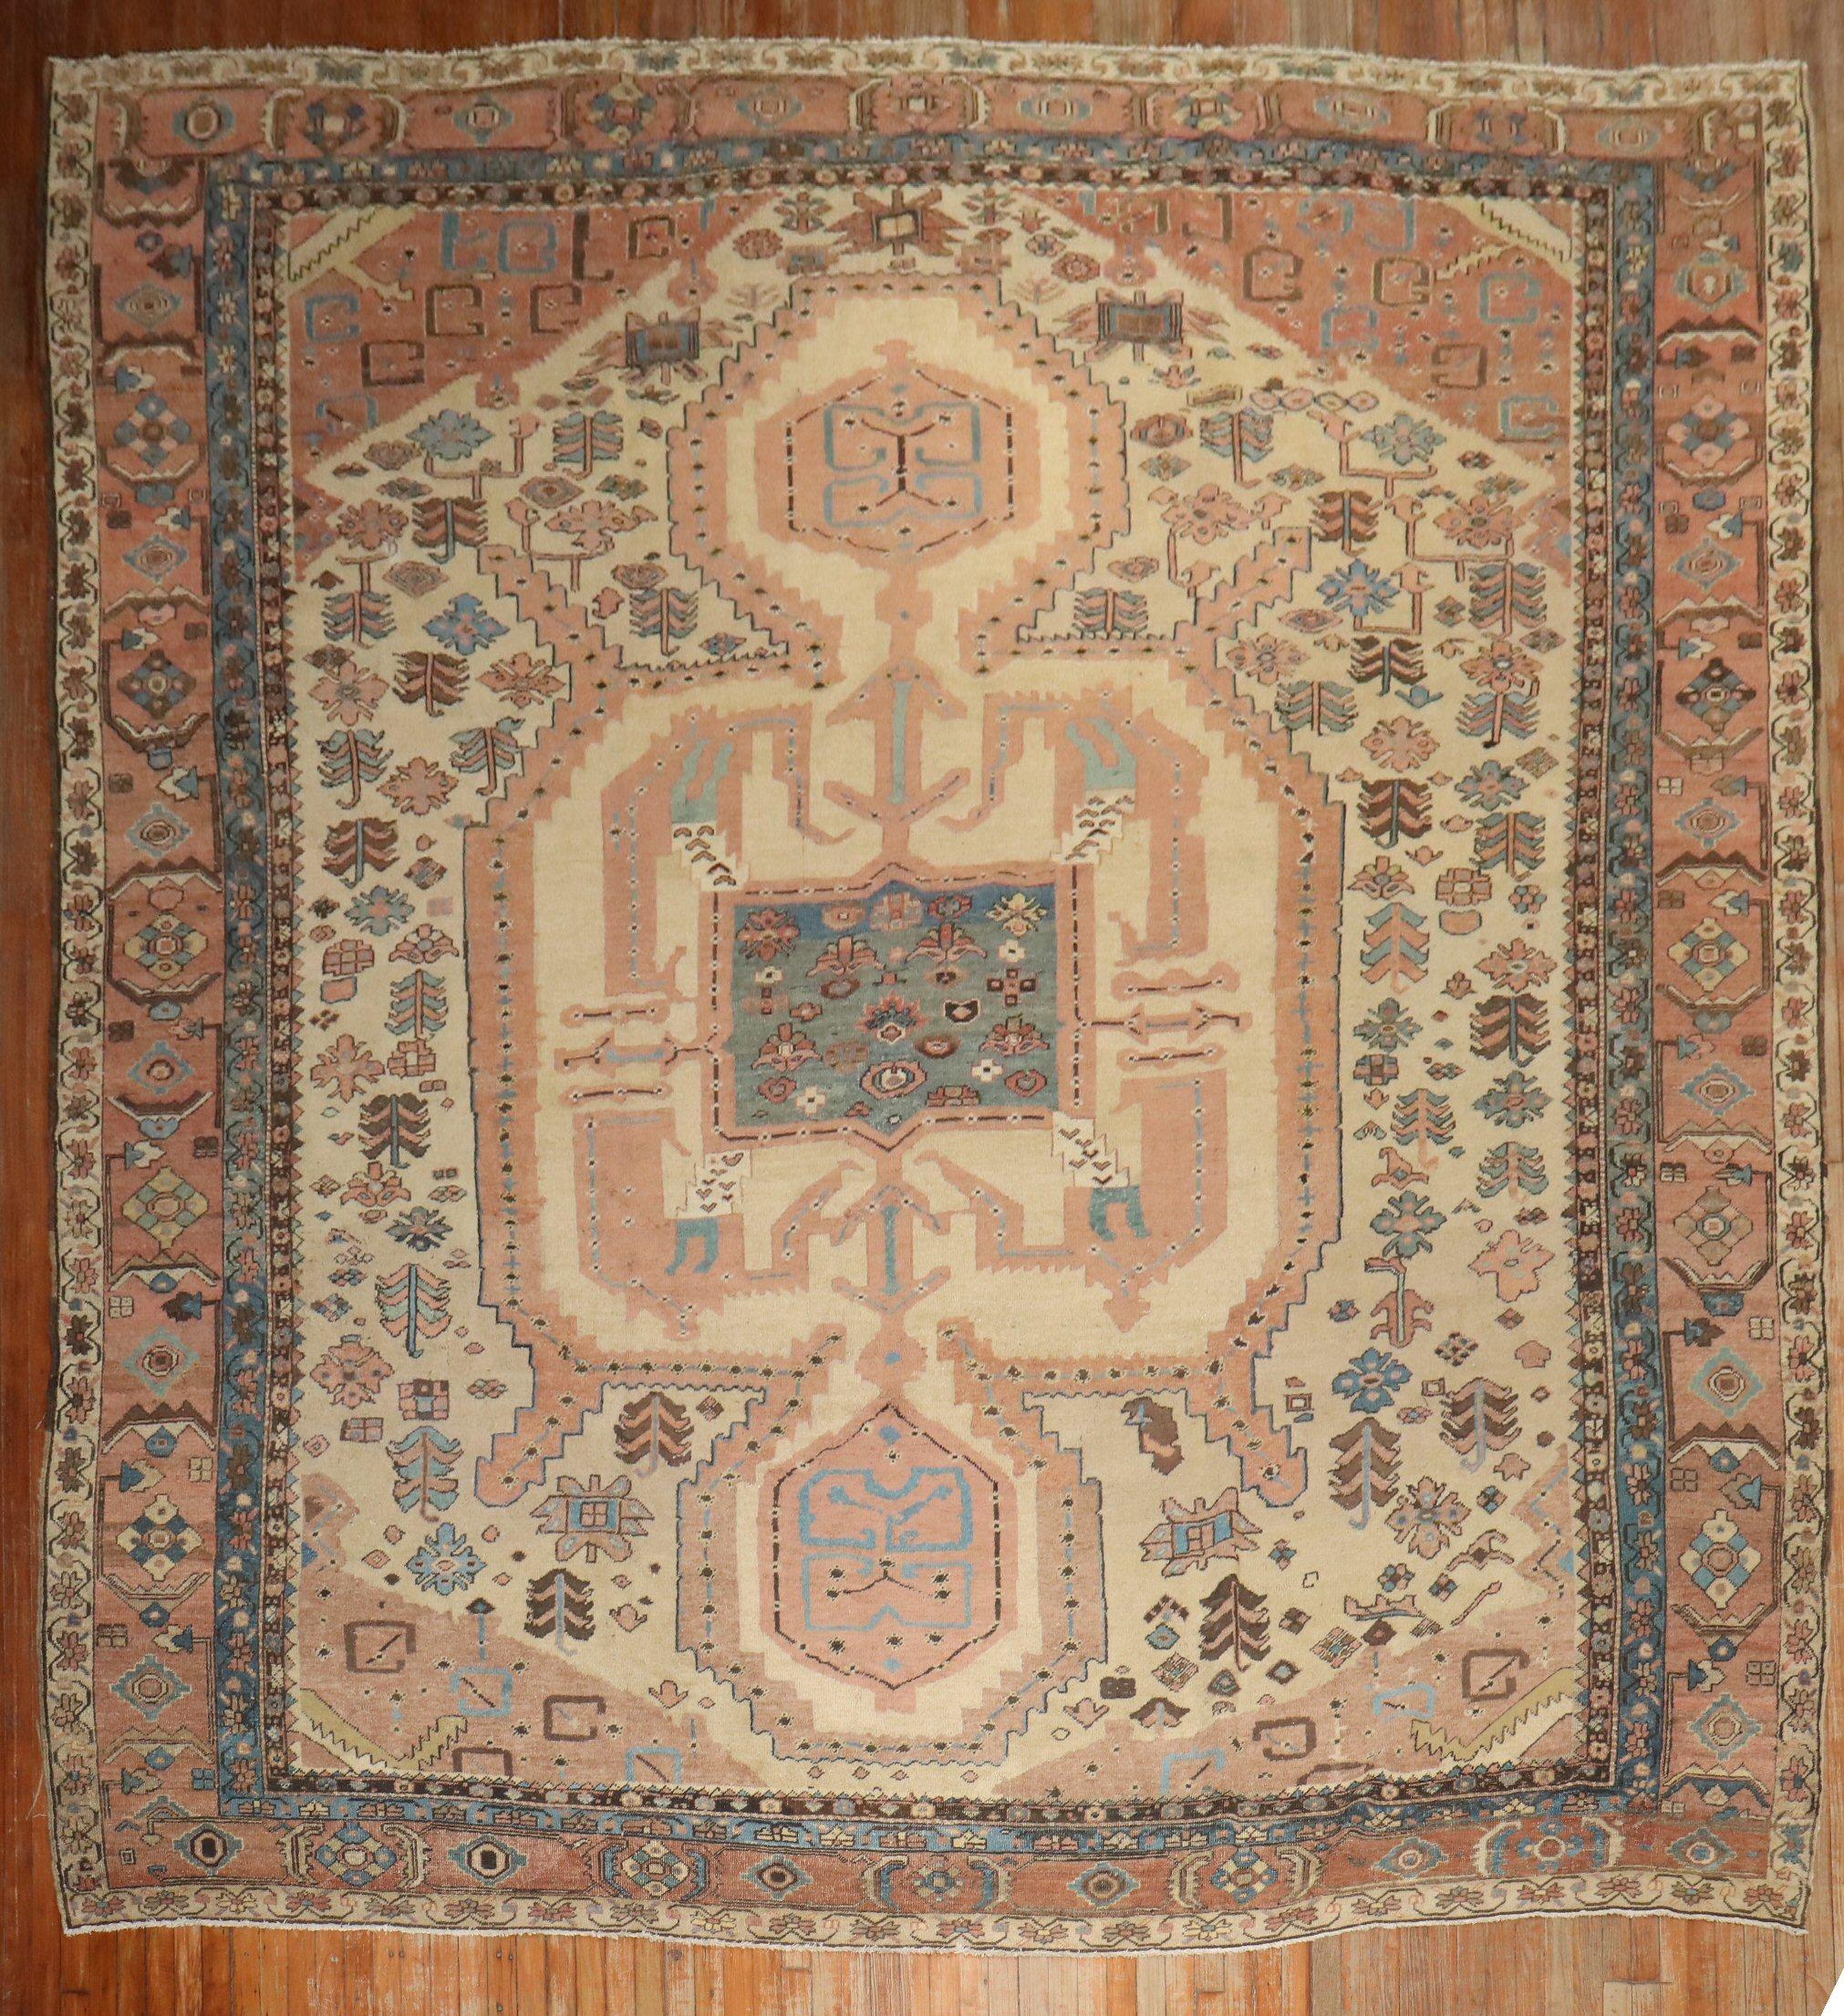 early 20th-century Persian Bakshaish Large Room size tribal rug

Measures: 11'9